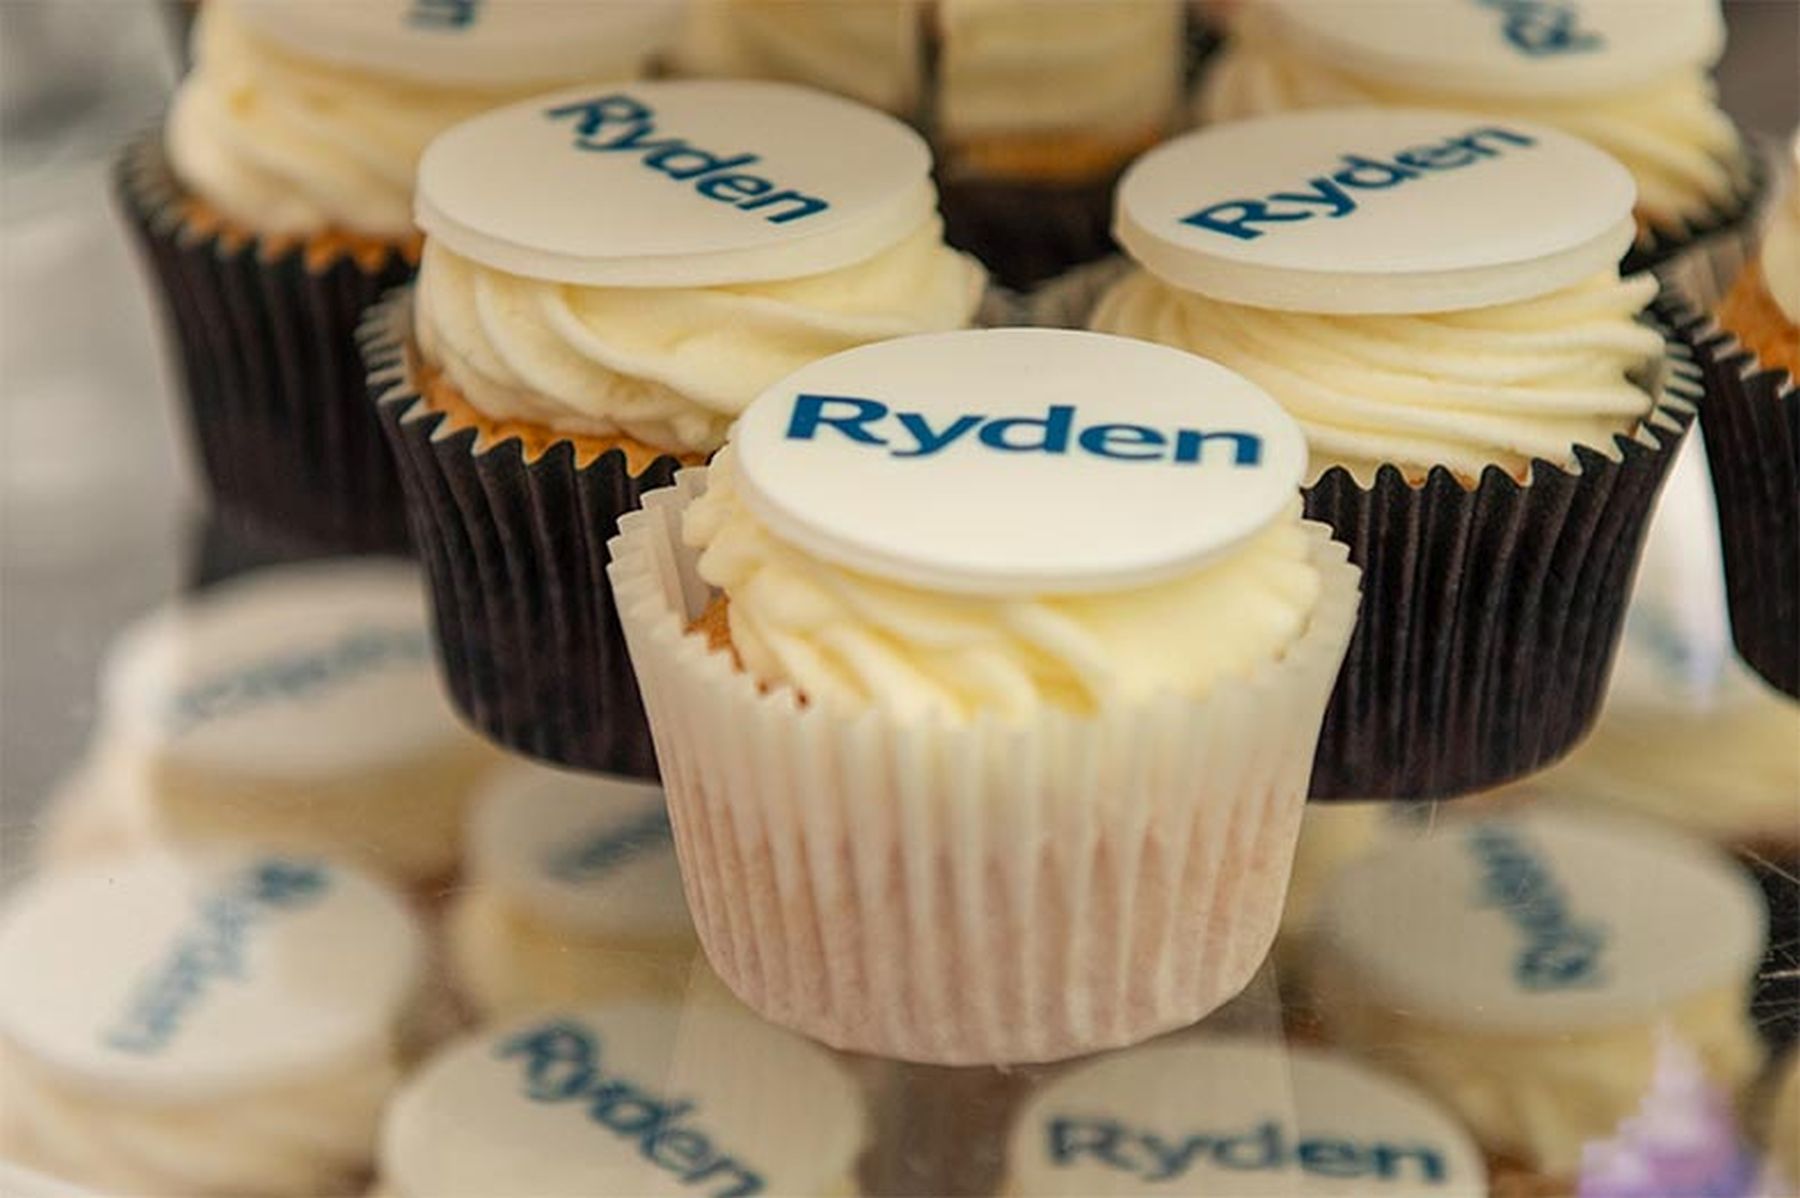 Ryden's 60th anniversary celebrations Image